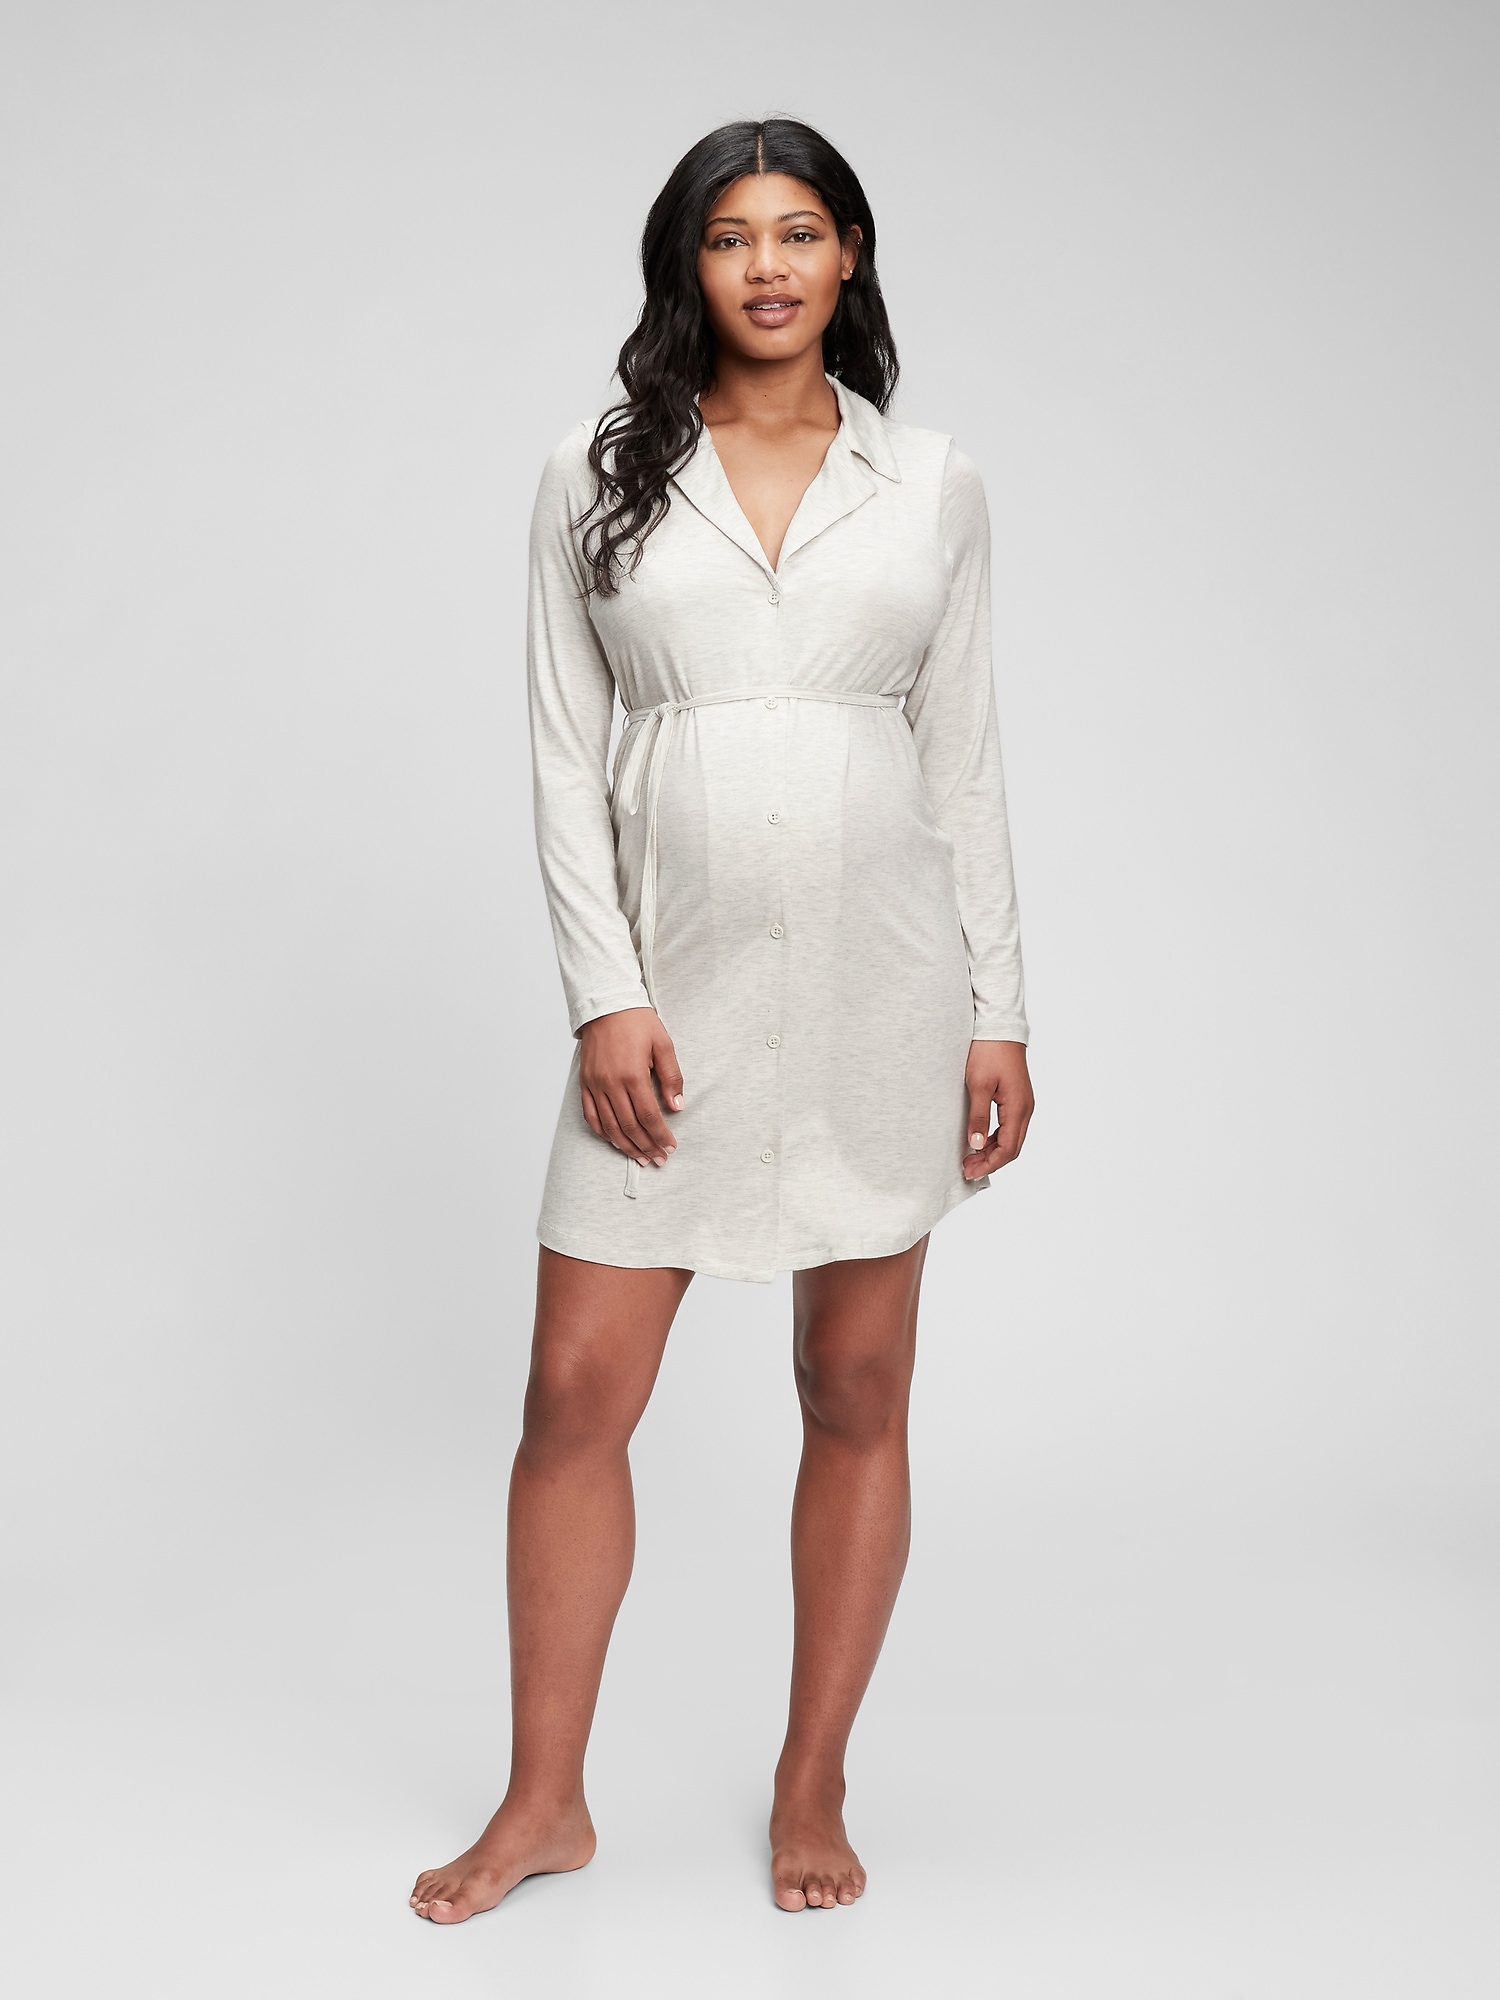 Maternity Modal Nightgown